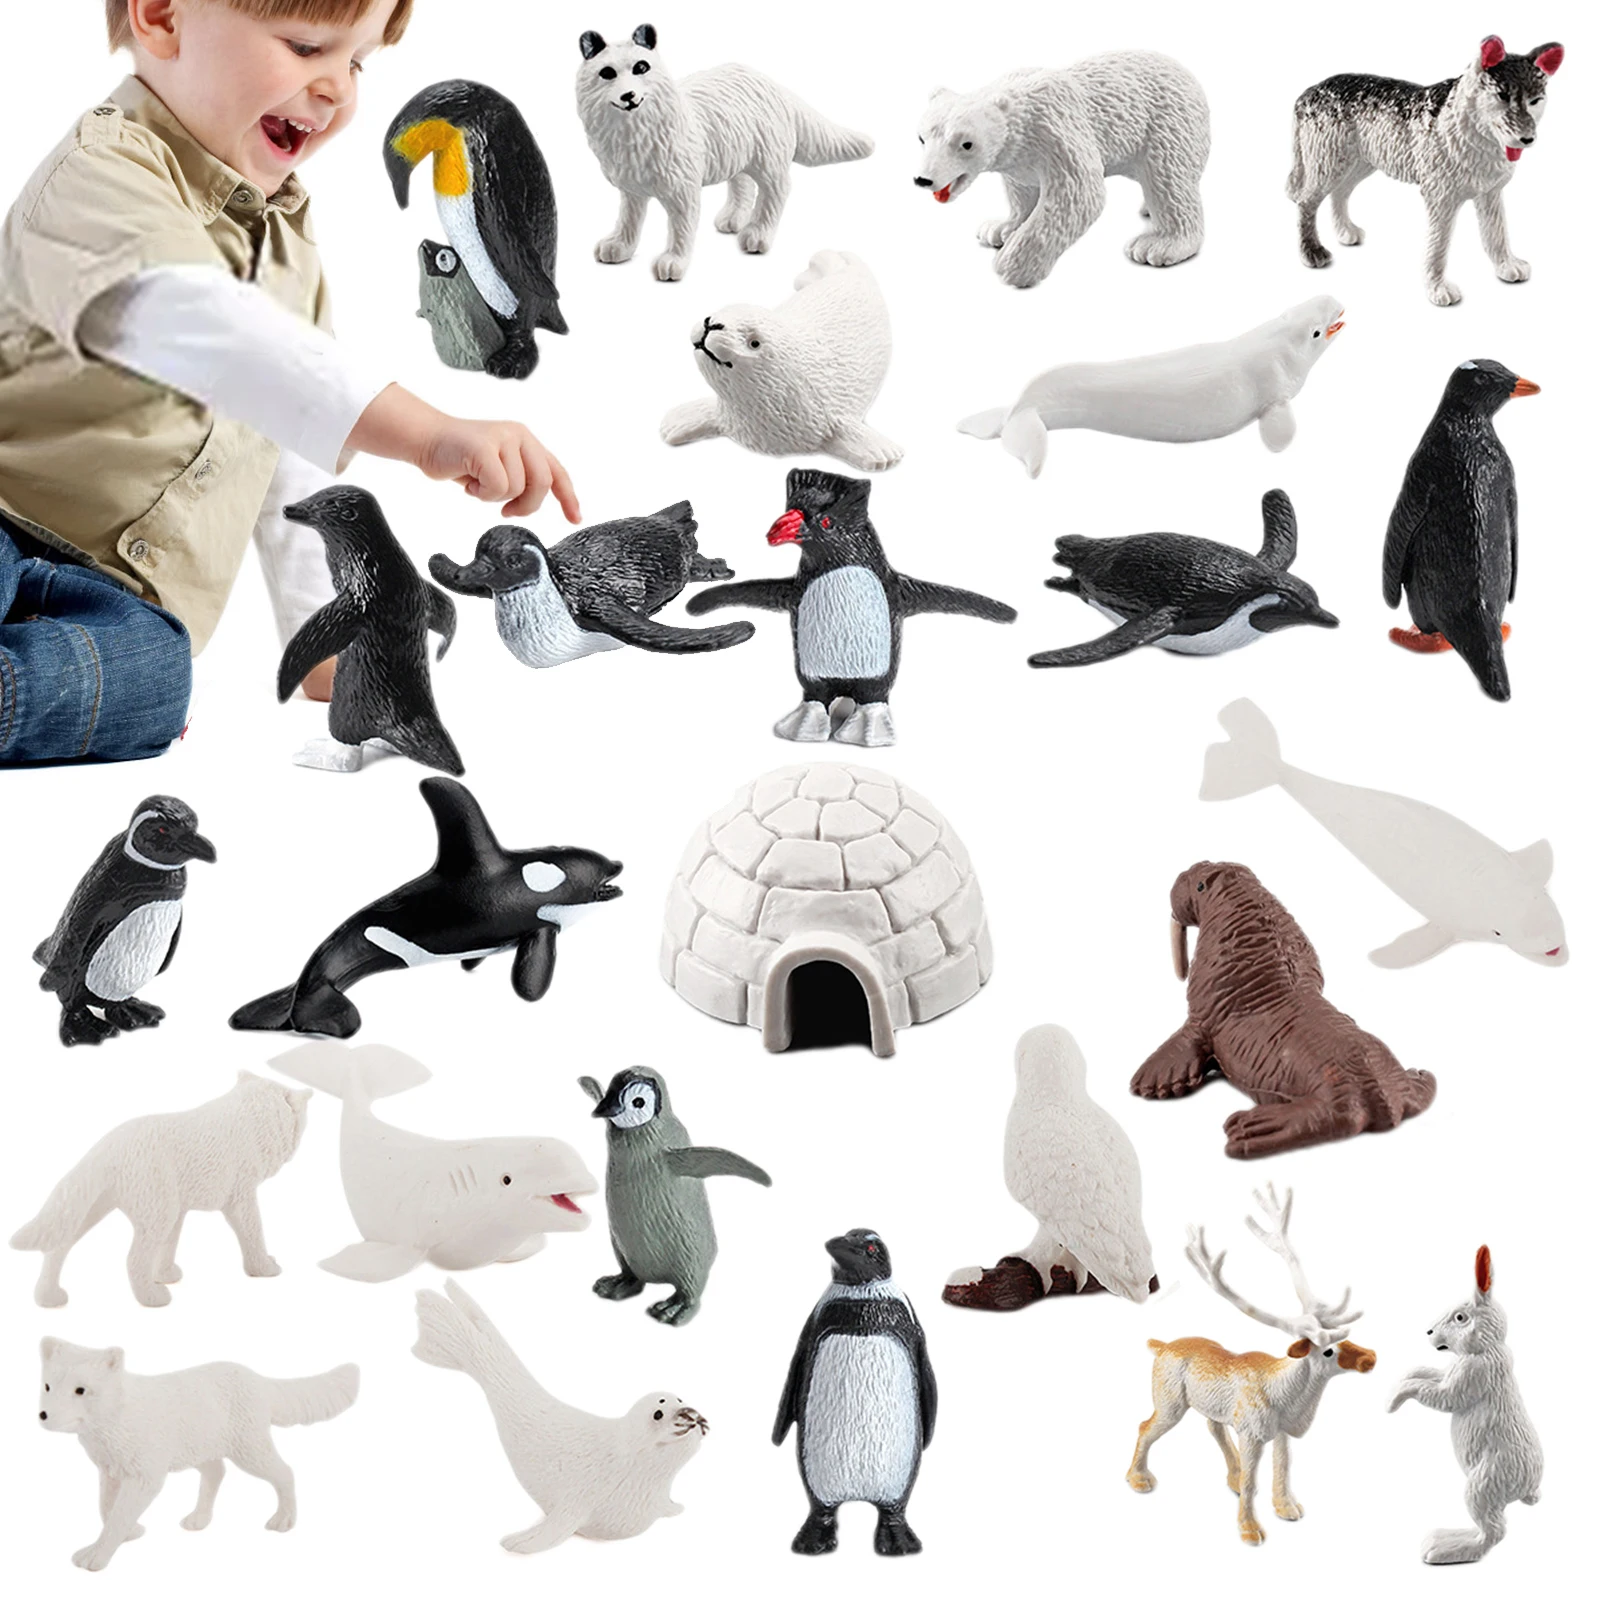 

Mini PolarArctic Animal Toy Figurines Set Penguins Reindeer Beluga Whales Arctic Animal Kit Model Educational Toy Birthday Gift